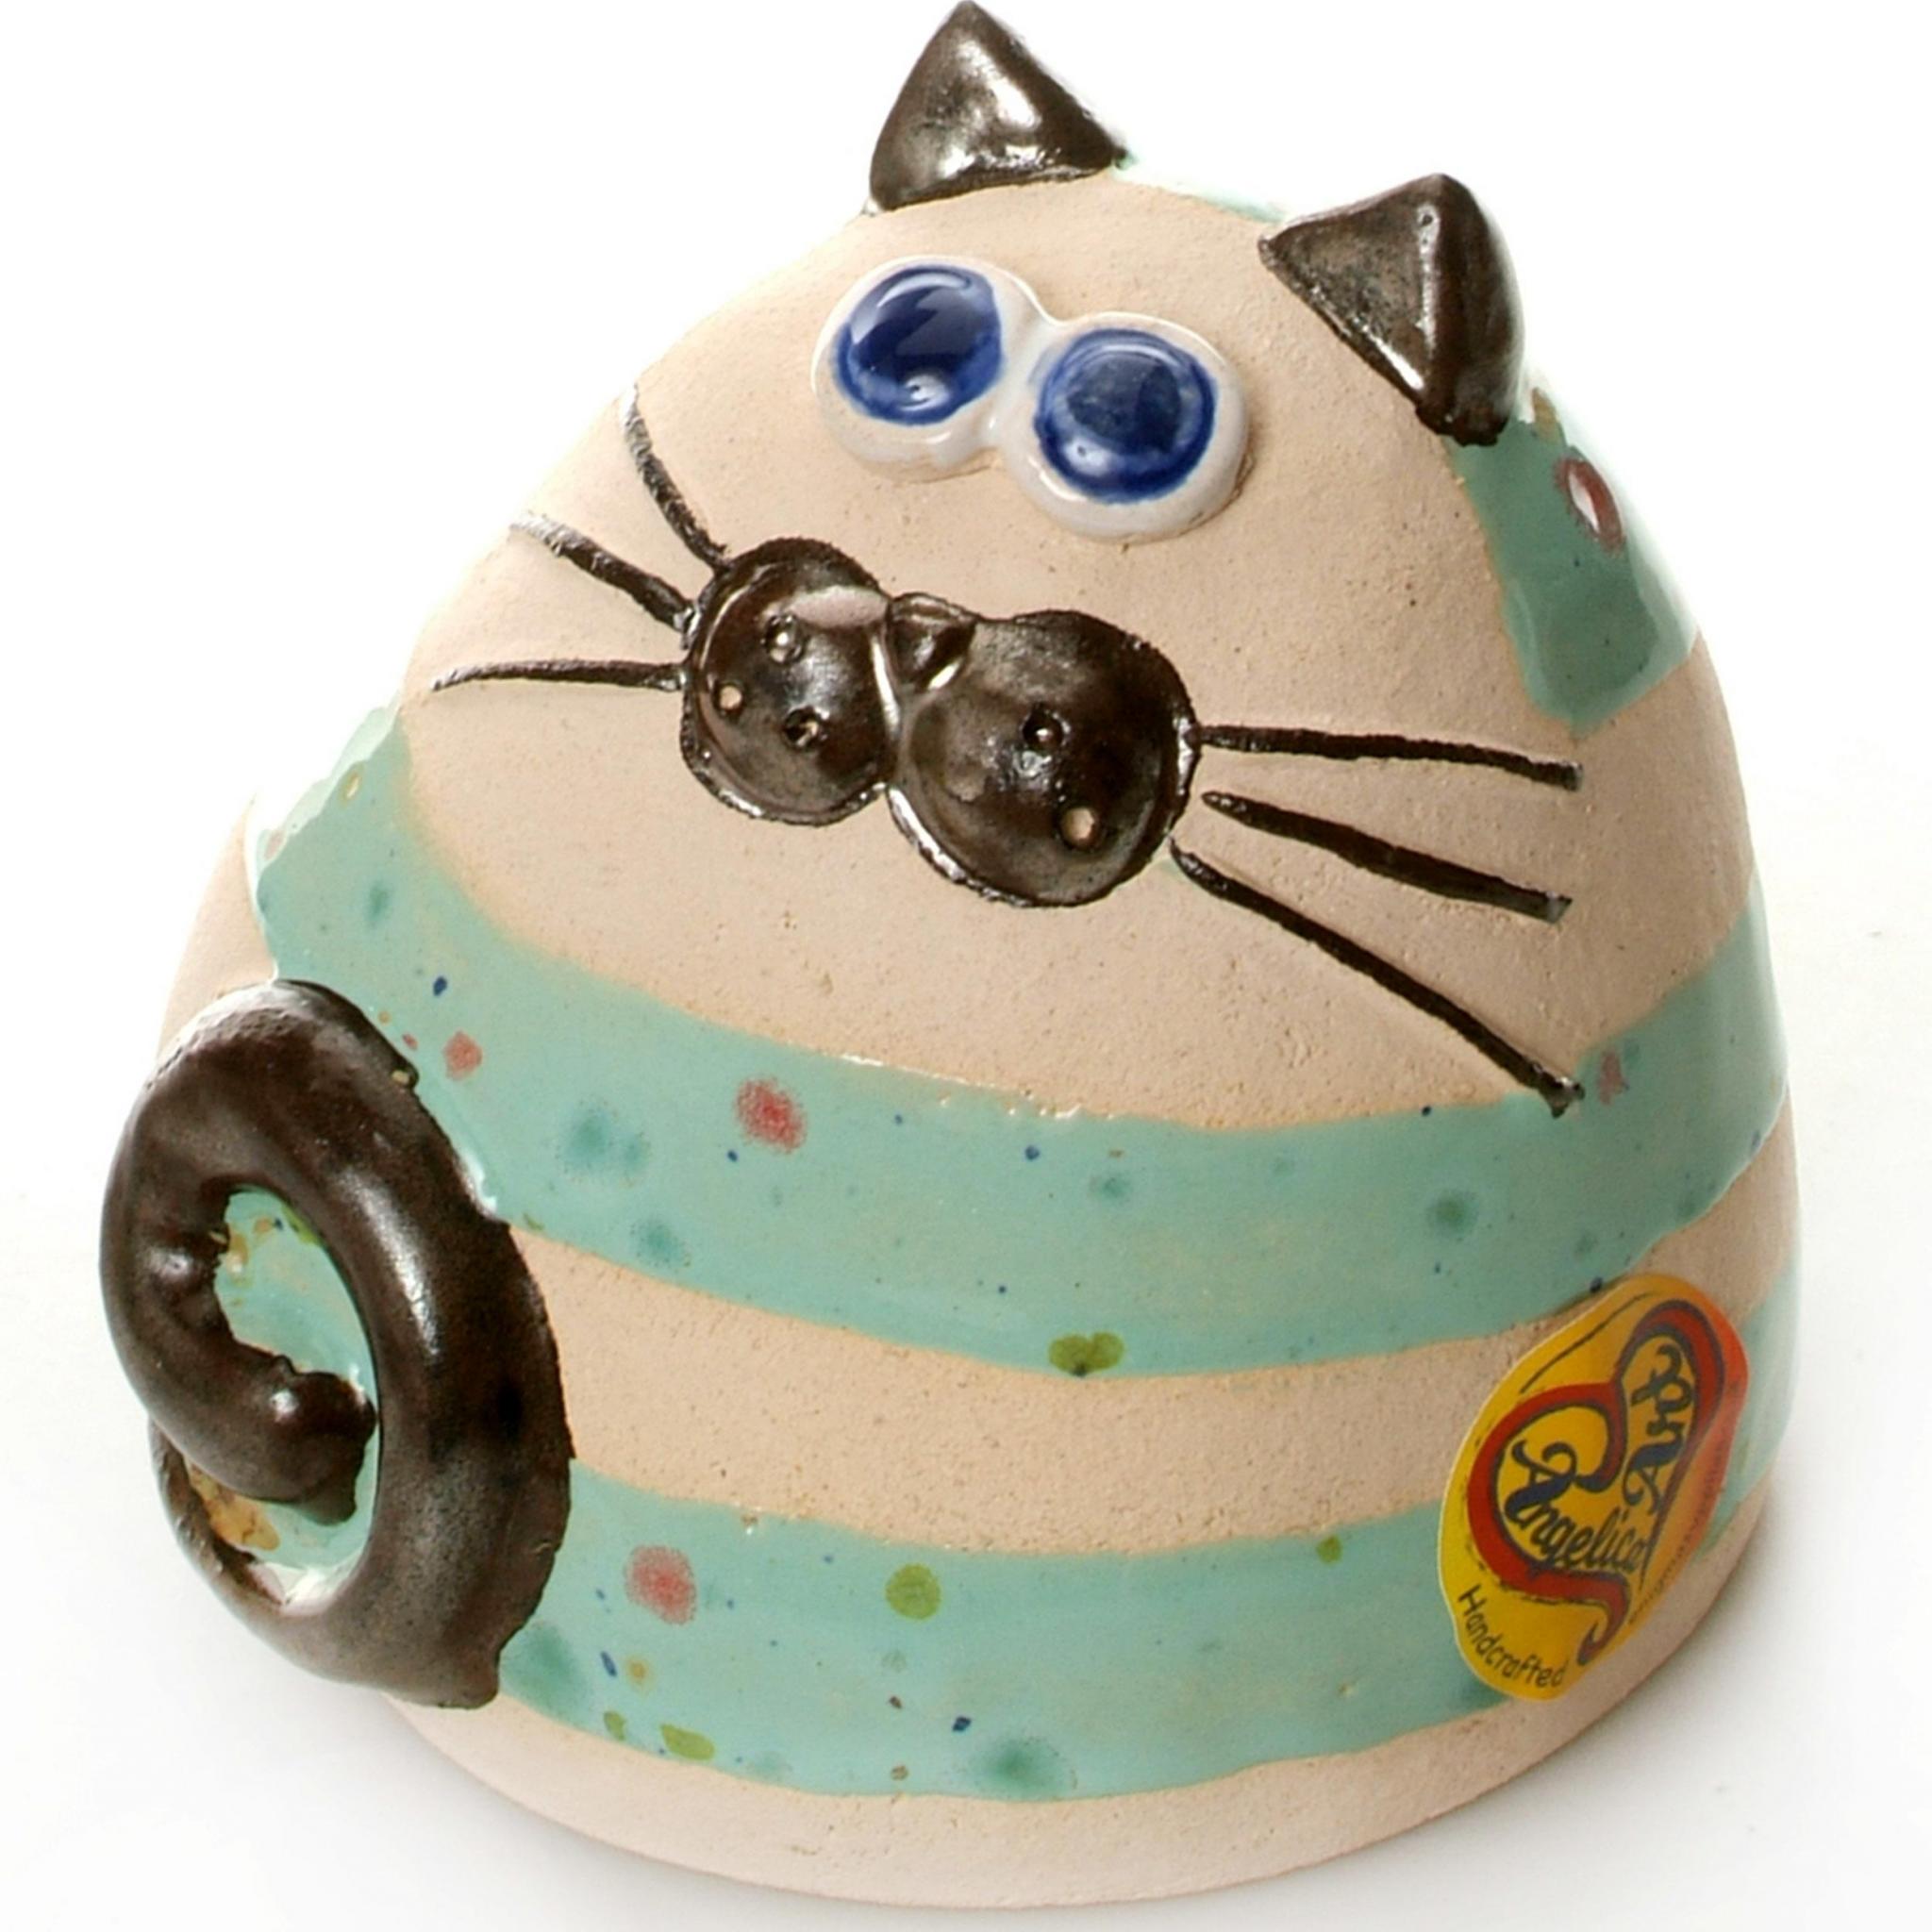 Ceramic cat ornaments